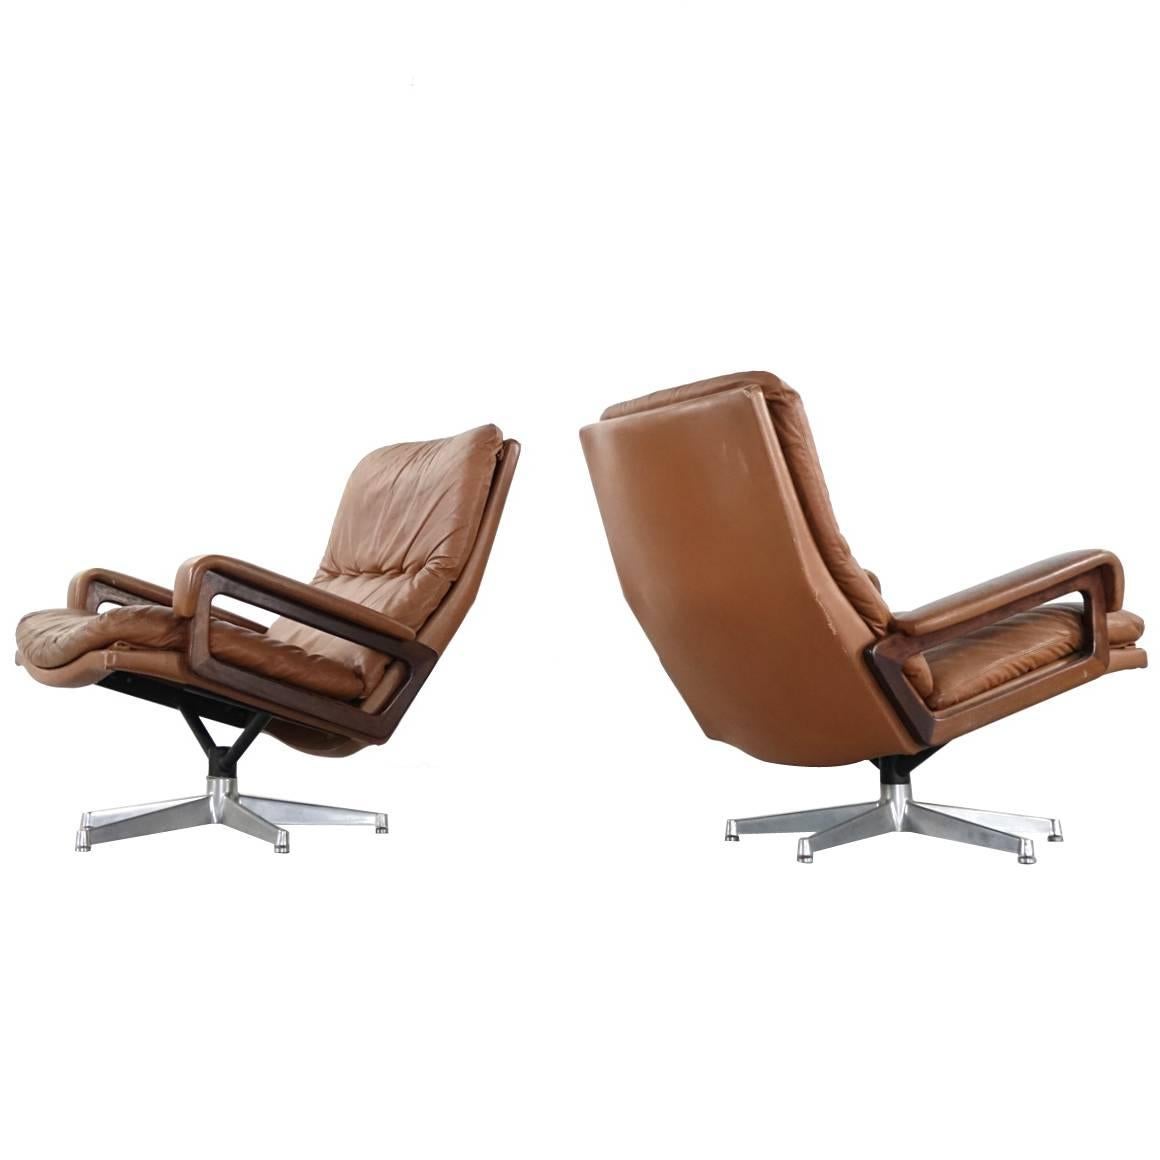 Pair of King Chair Design Andre Vandenbeuck for Collection Strässle Internat